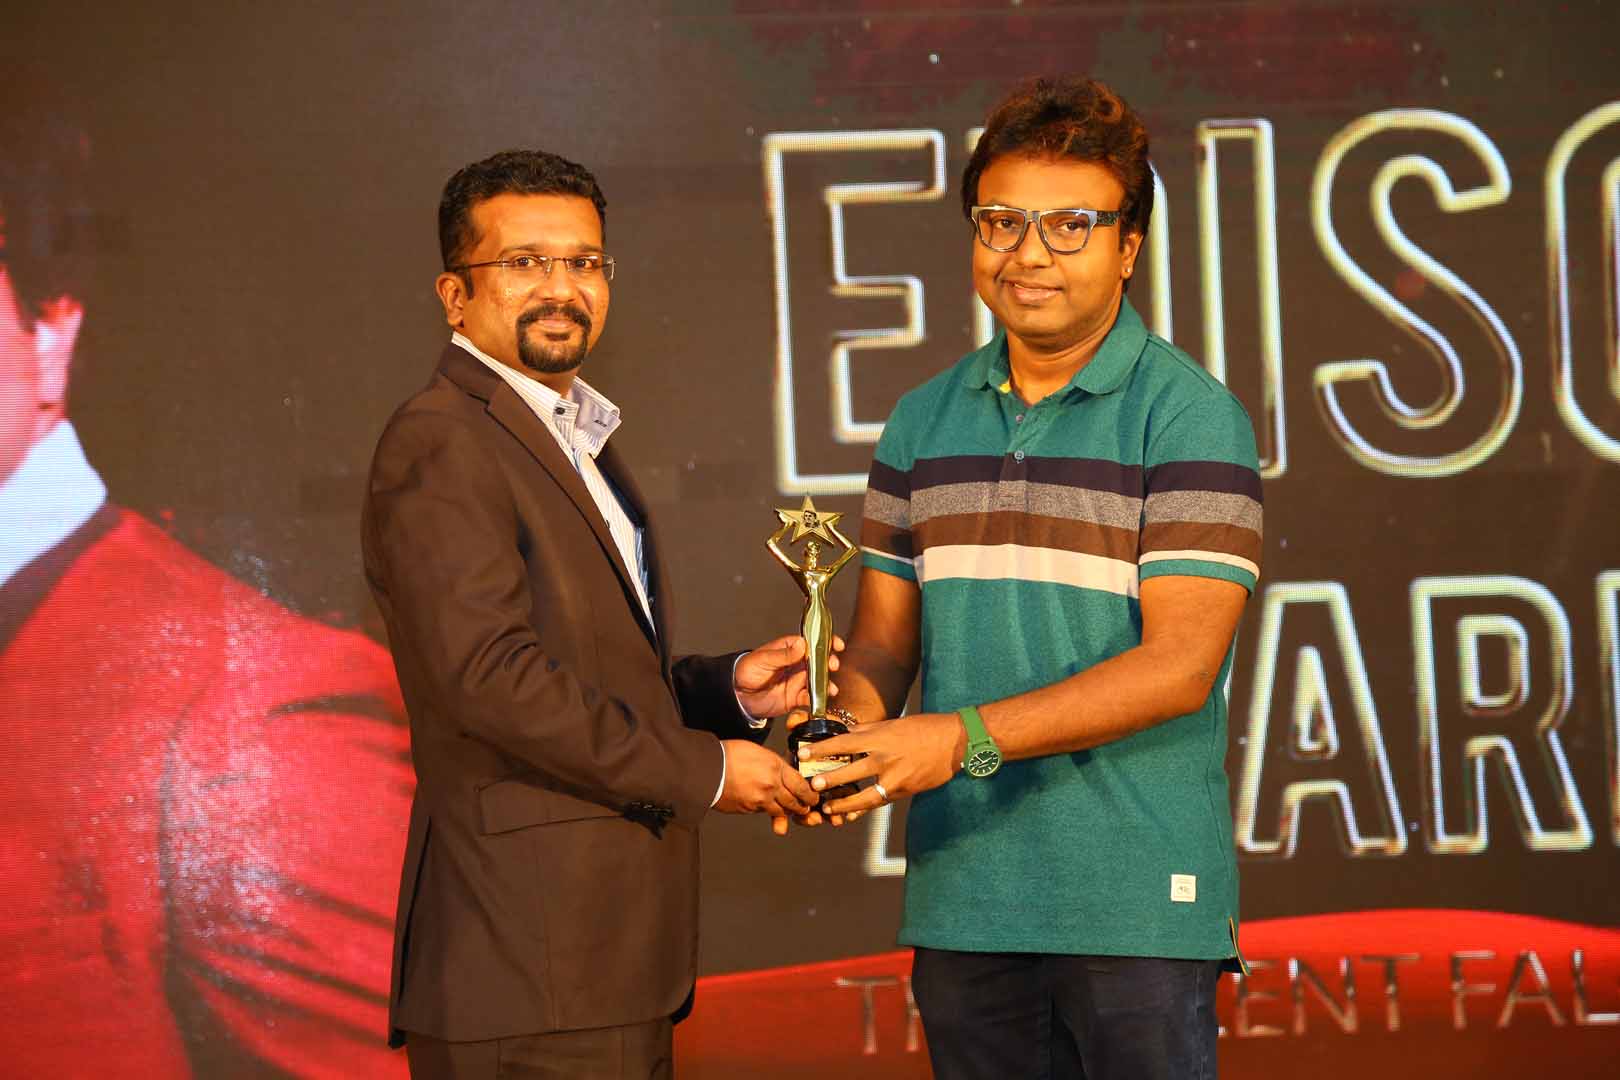 Edison award 2018 